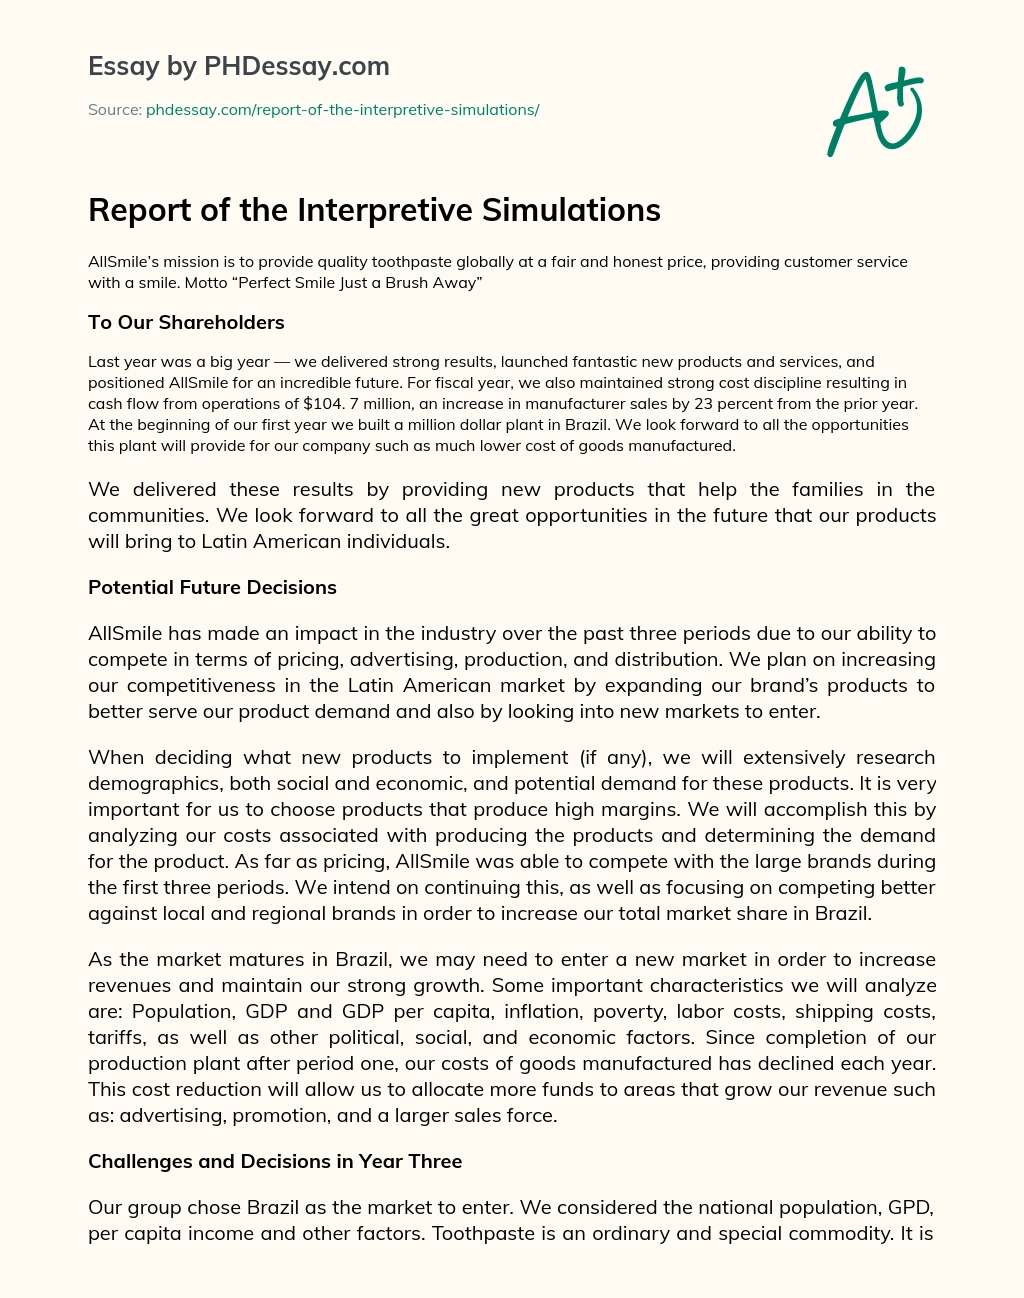 Report of the Interpretive Simulations essay